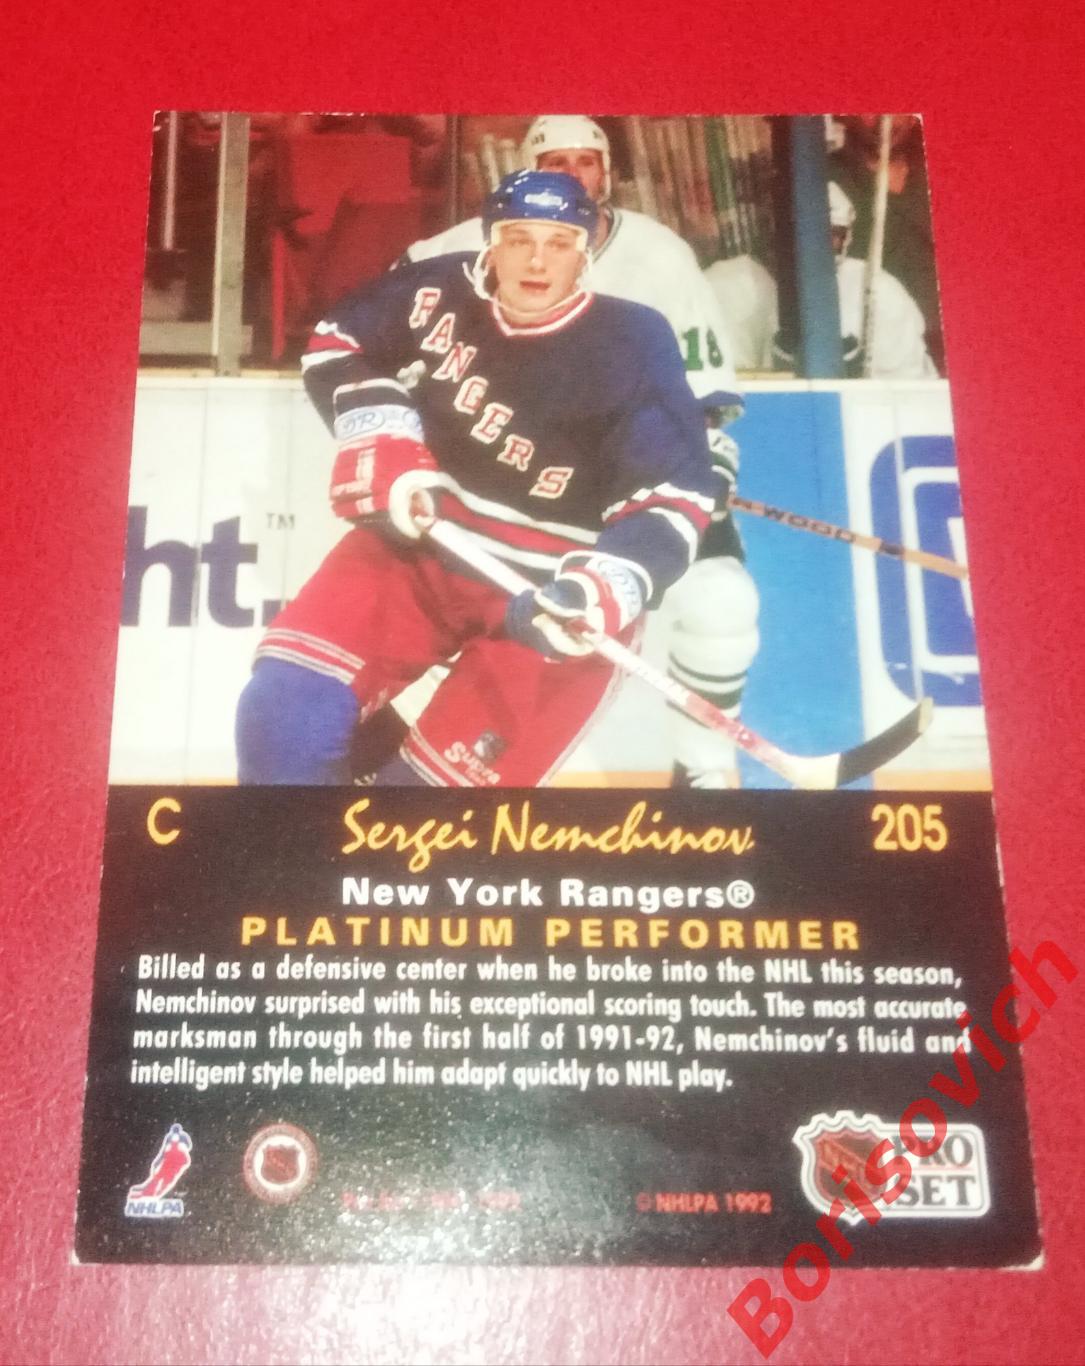 Карточка НХЛ / NHL Сергей Немчинов / Sergei Nemchinov Нью Йорк Рейнджерс N 205 1